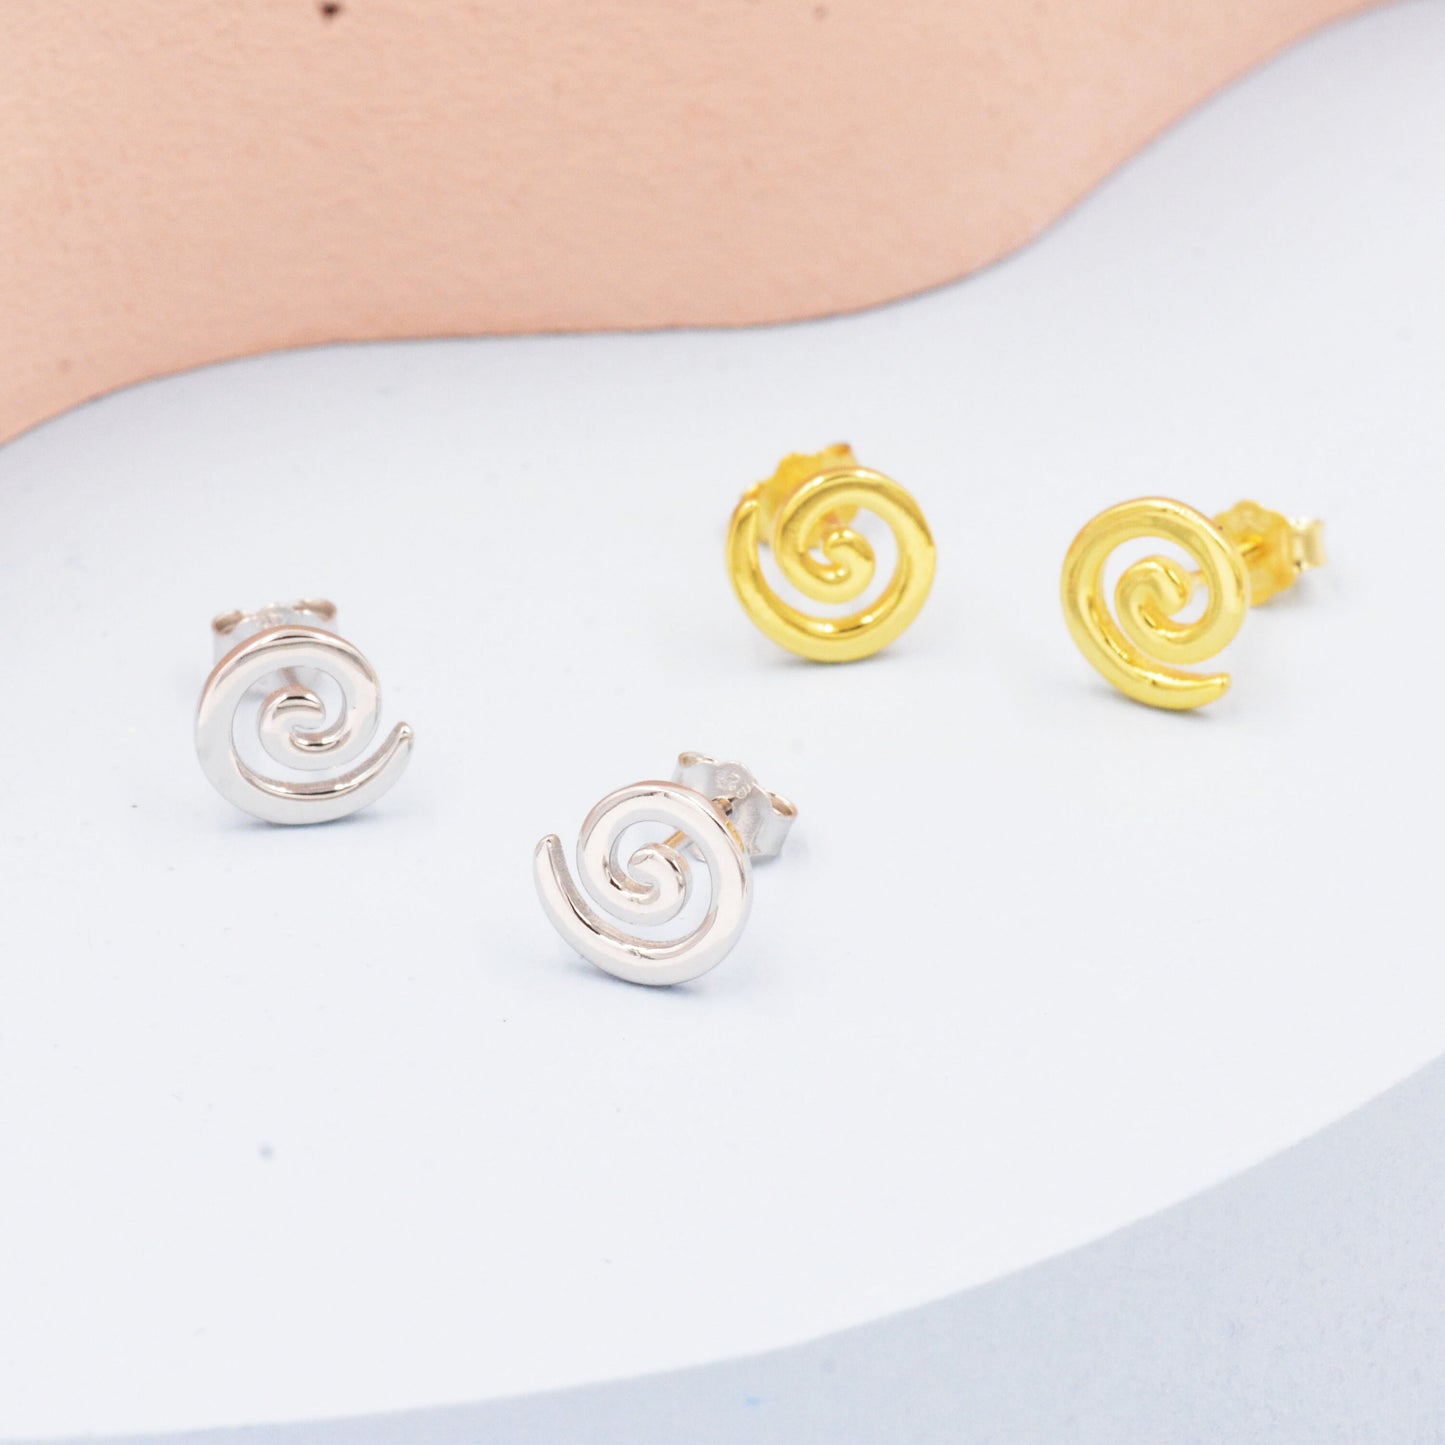 Koru Circle Spiral Stud Earrings in Sterling Silver - Infinity Swirl Earrings - New Zealand M?ori Art Stud Earrings  - Kiwi Circle